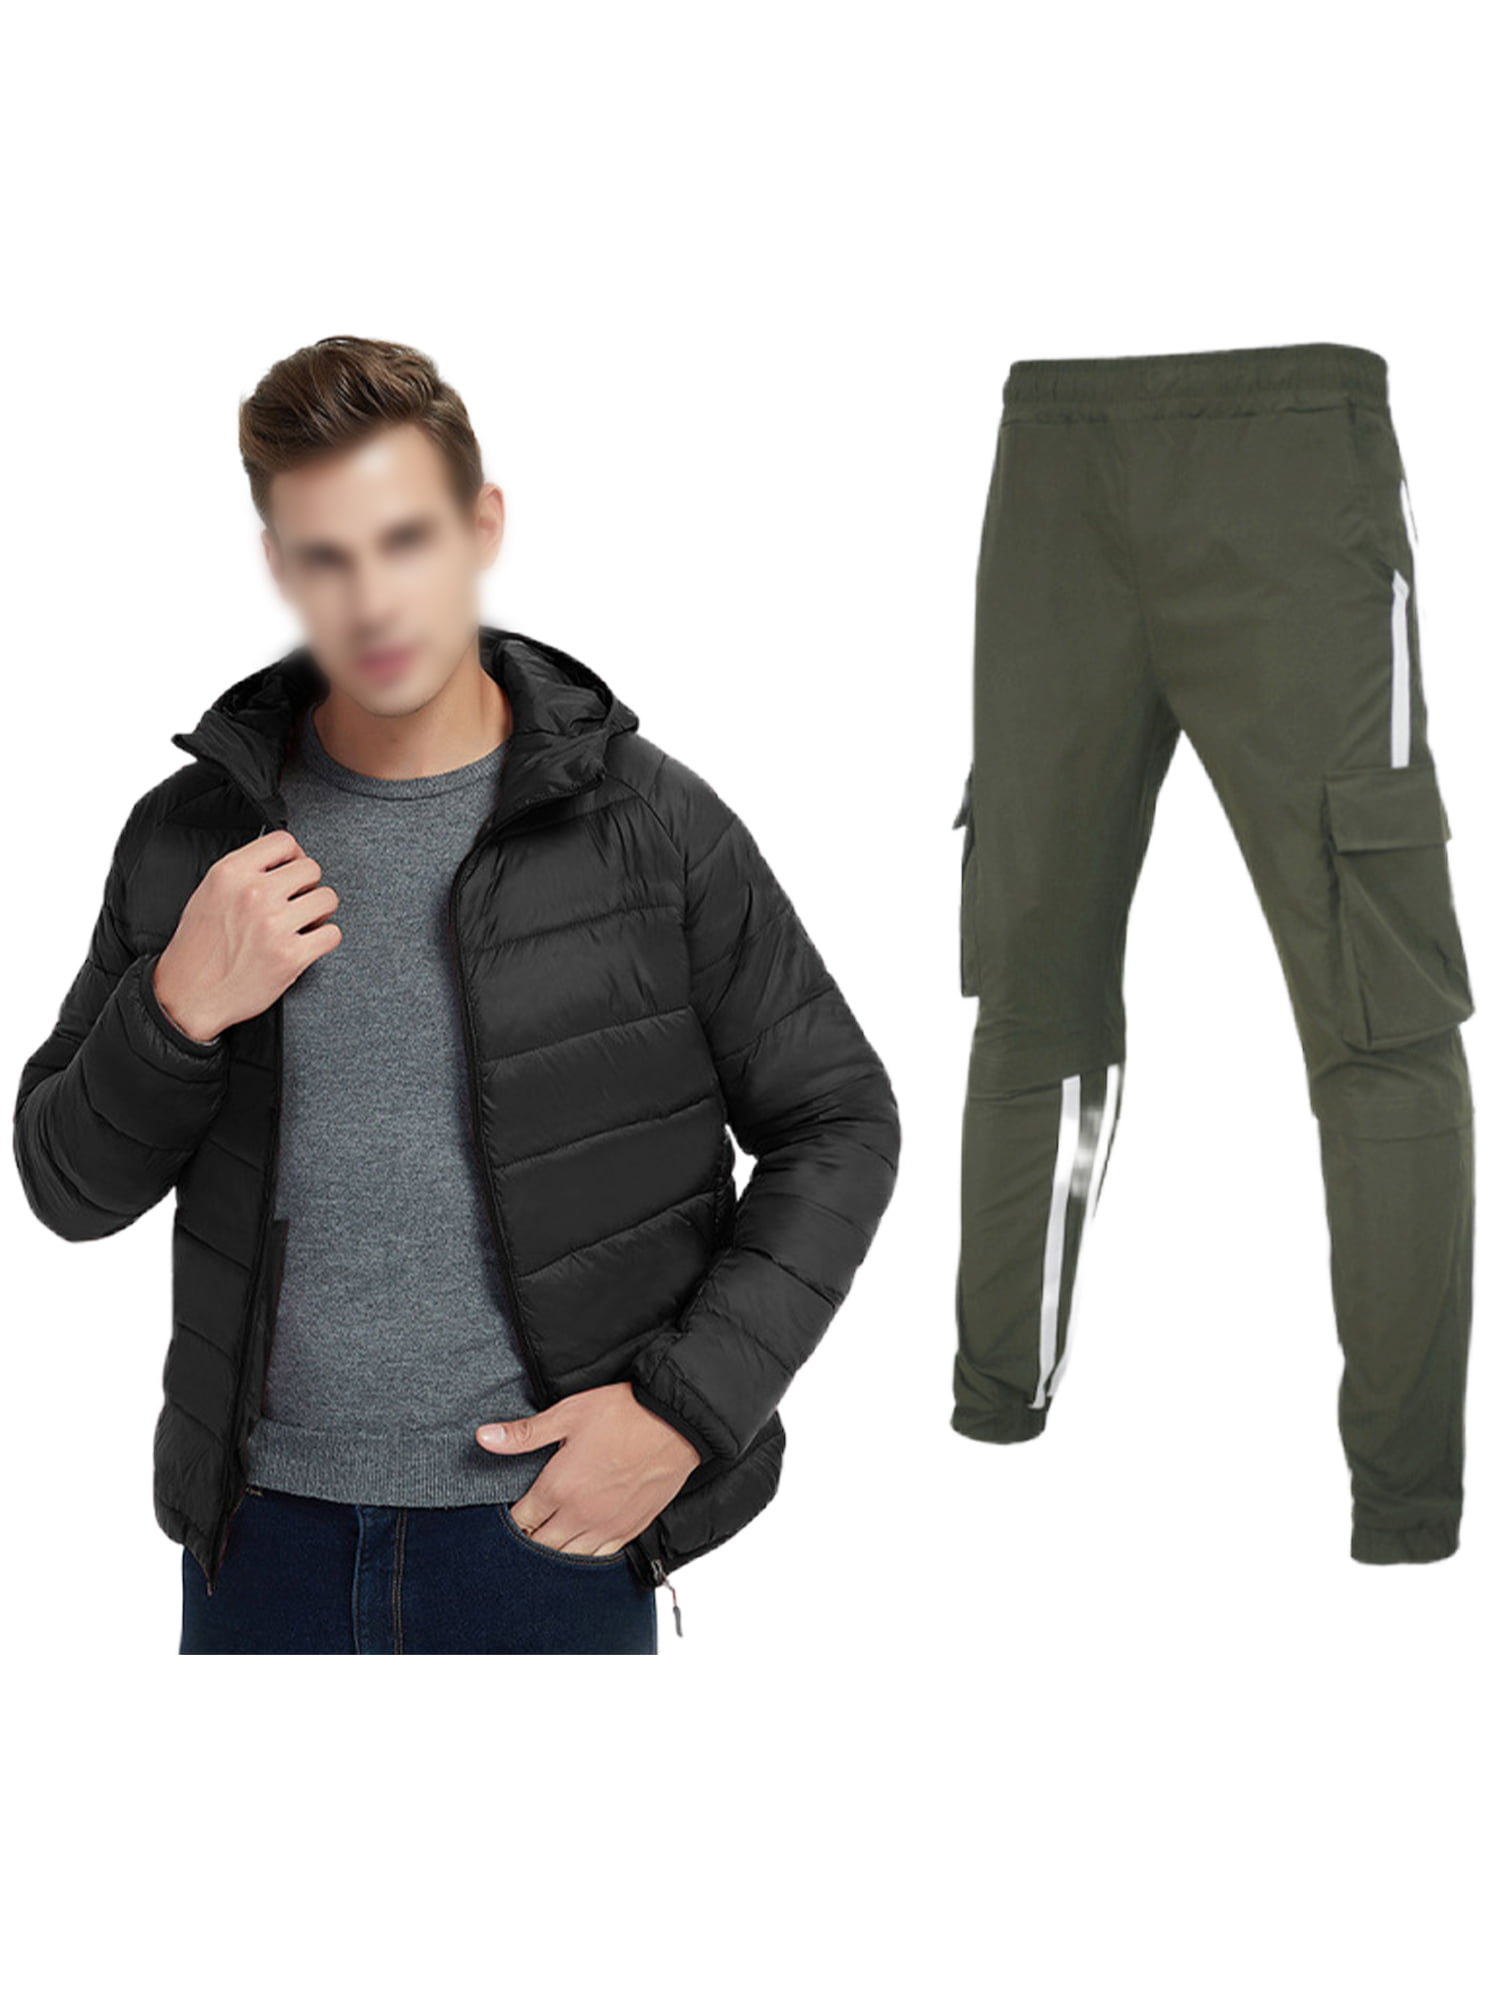 GenericMen Winter Packable Down Puffer Jacket Lightweight Zipper Coat 